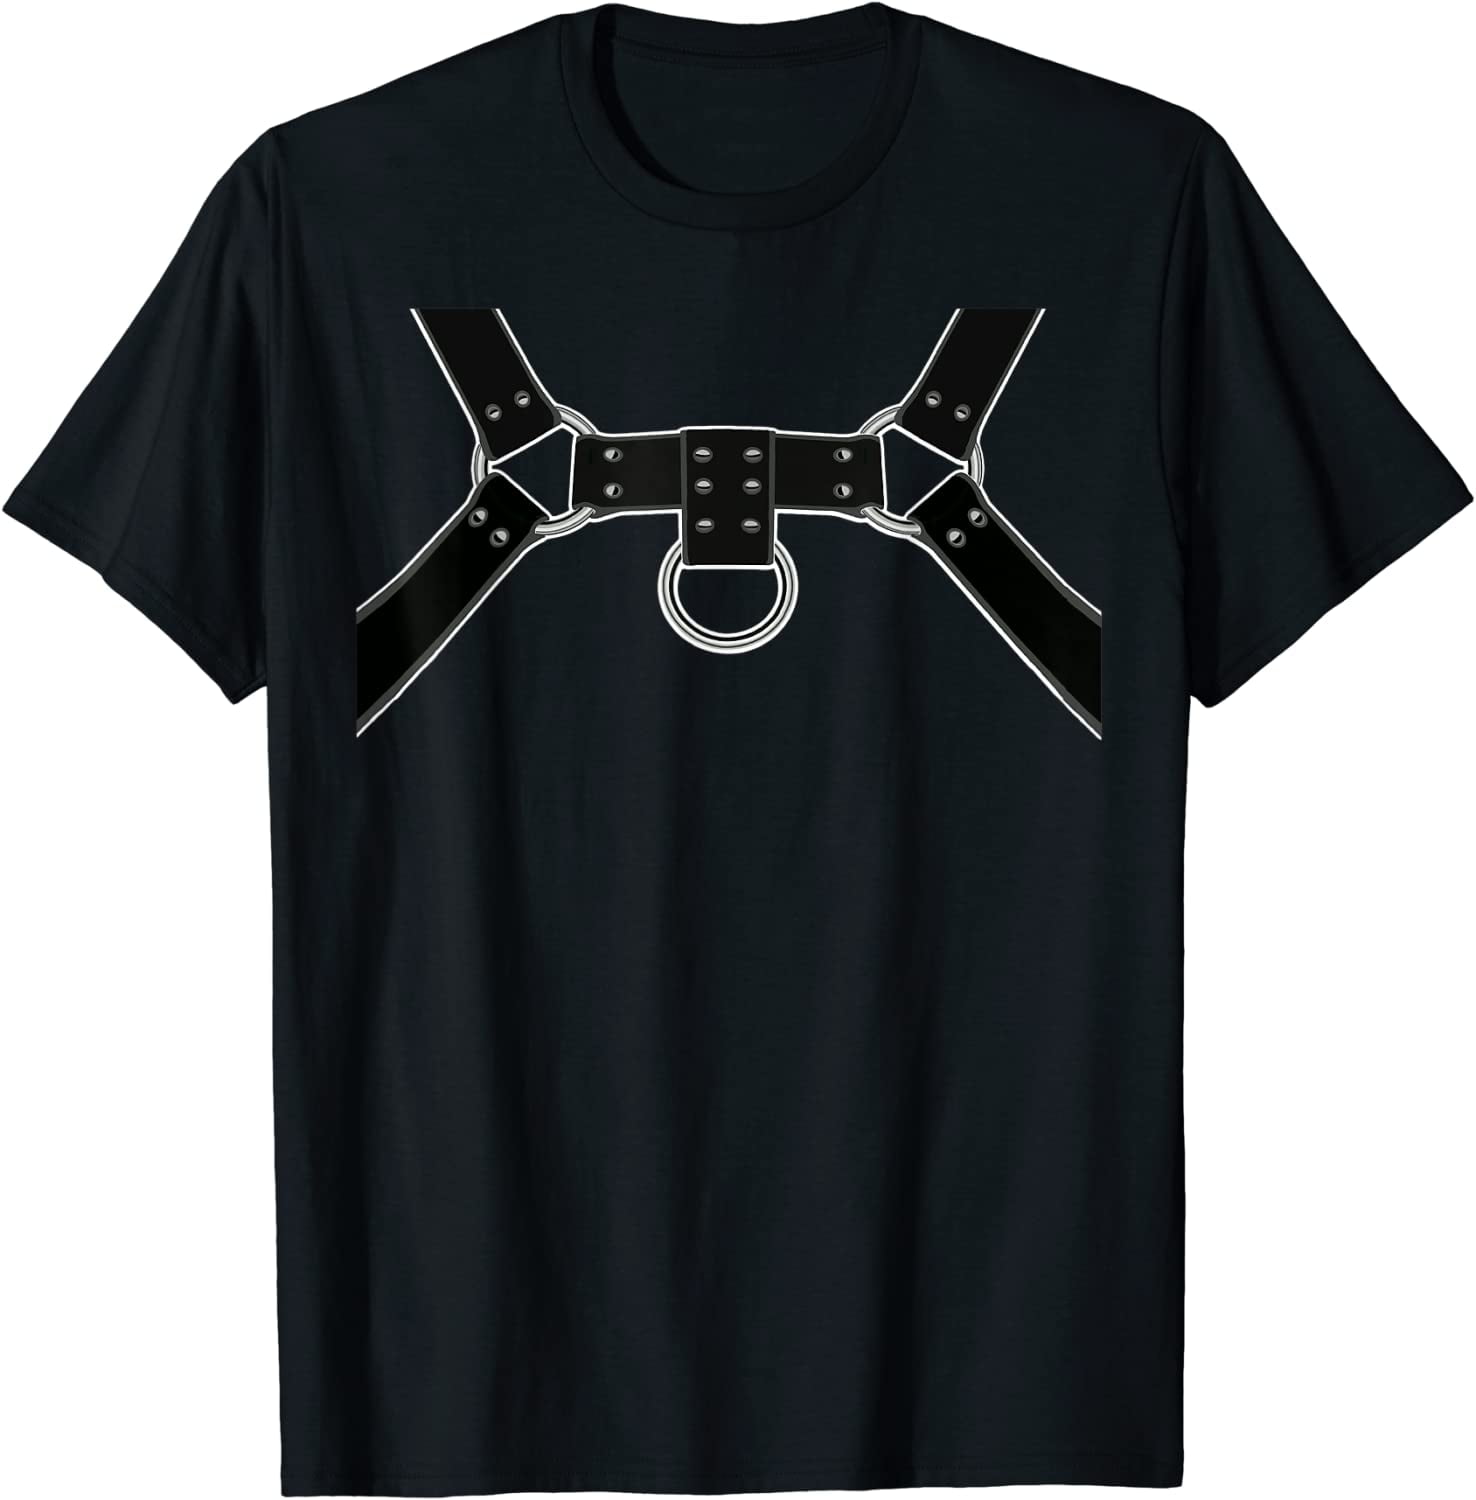 Black Leather Harness print B-S-D-M Kink Gay Leather Pride T-Shirt -  Walmart.com